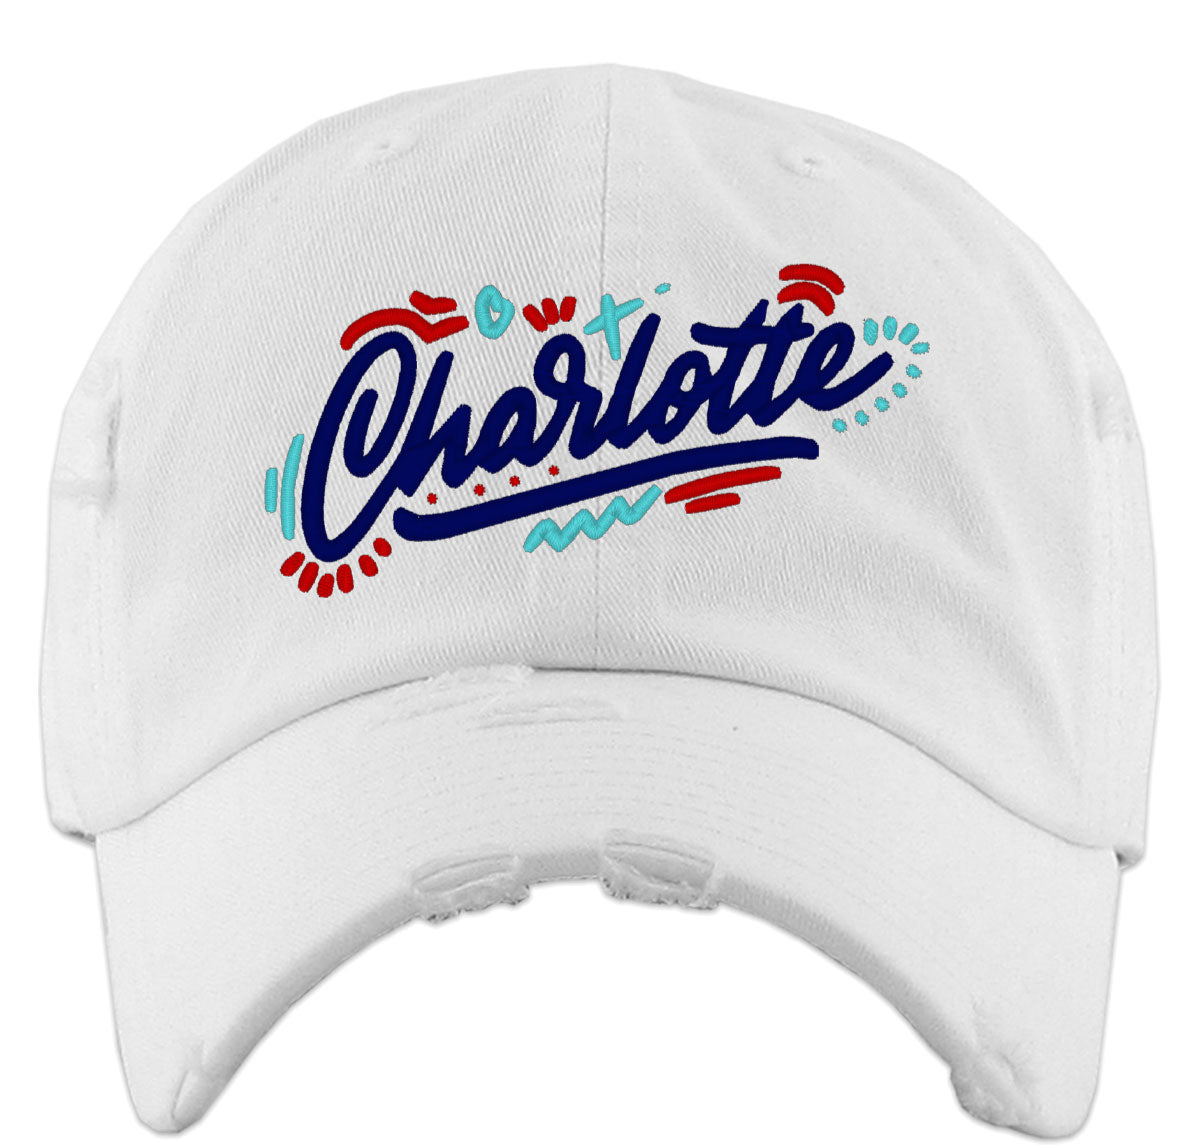 Charlotte North Carolina Vintage Baseball Cap